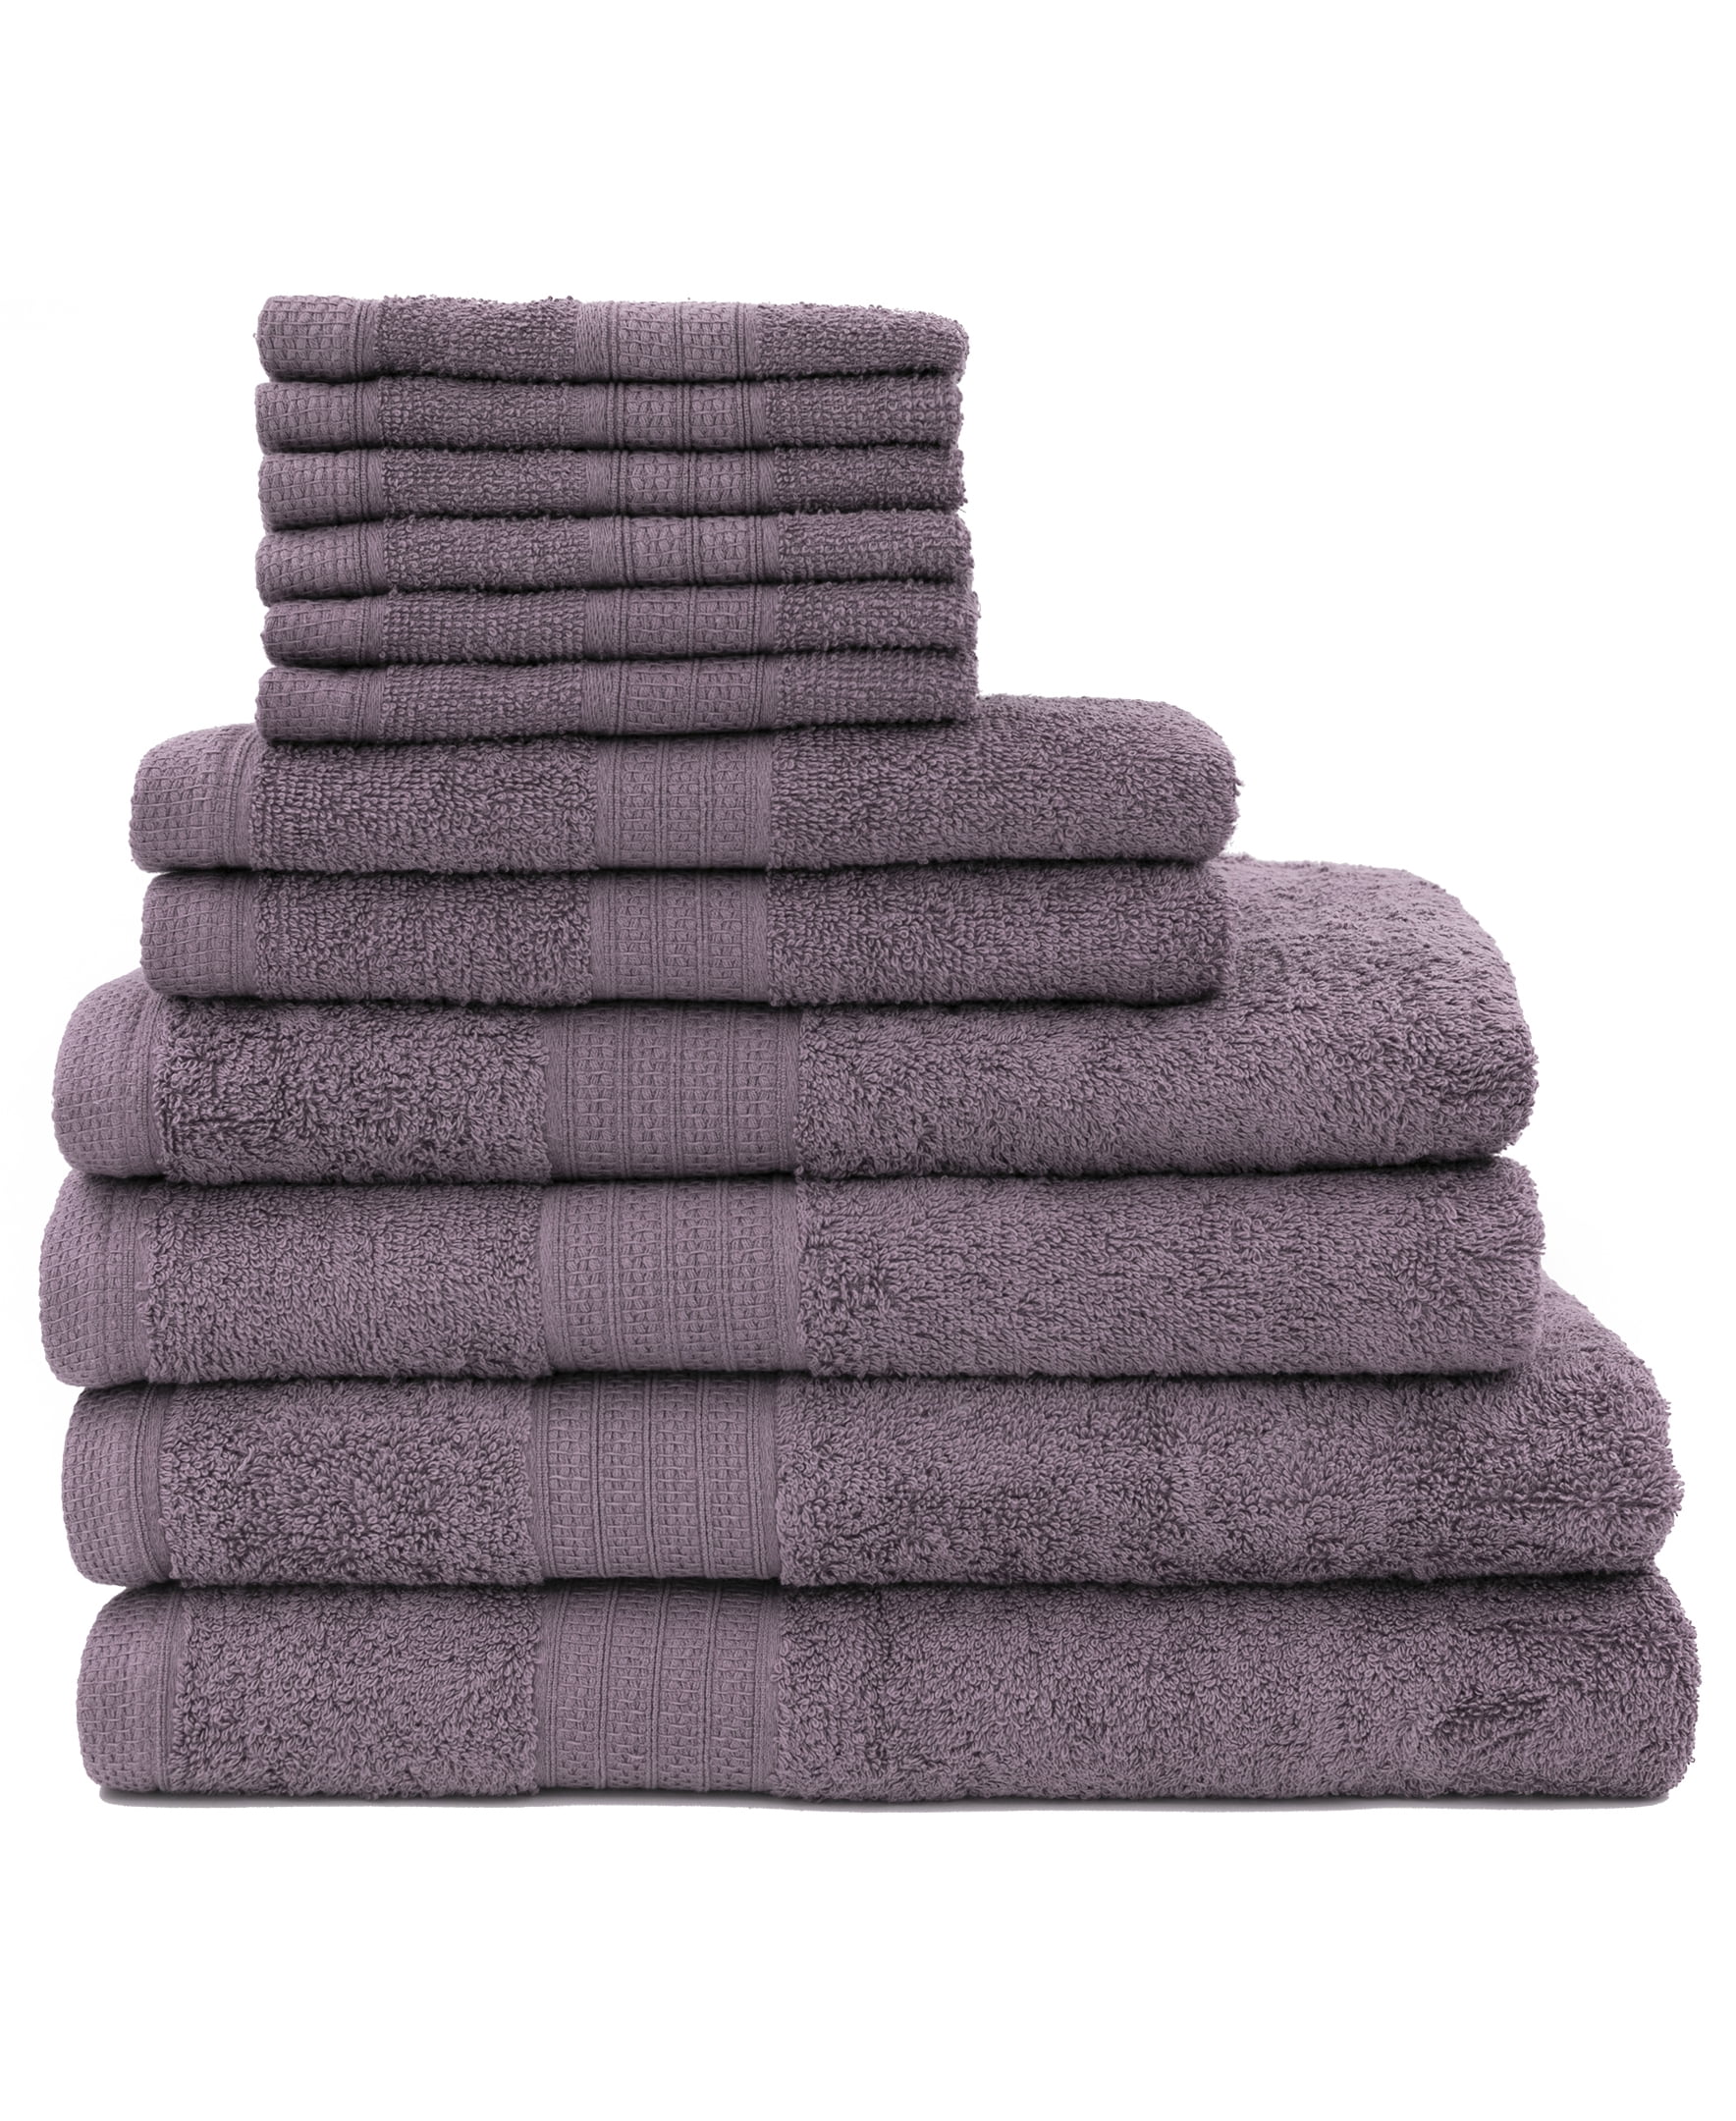 Luxury towels 100% cotton super soft fluffy hand bath towel sheet sparkle border 